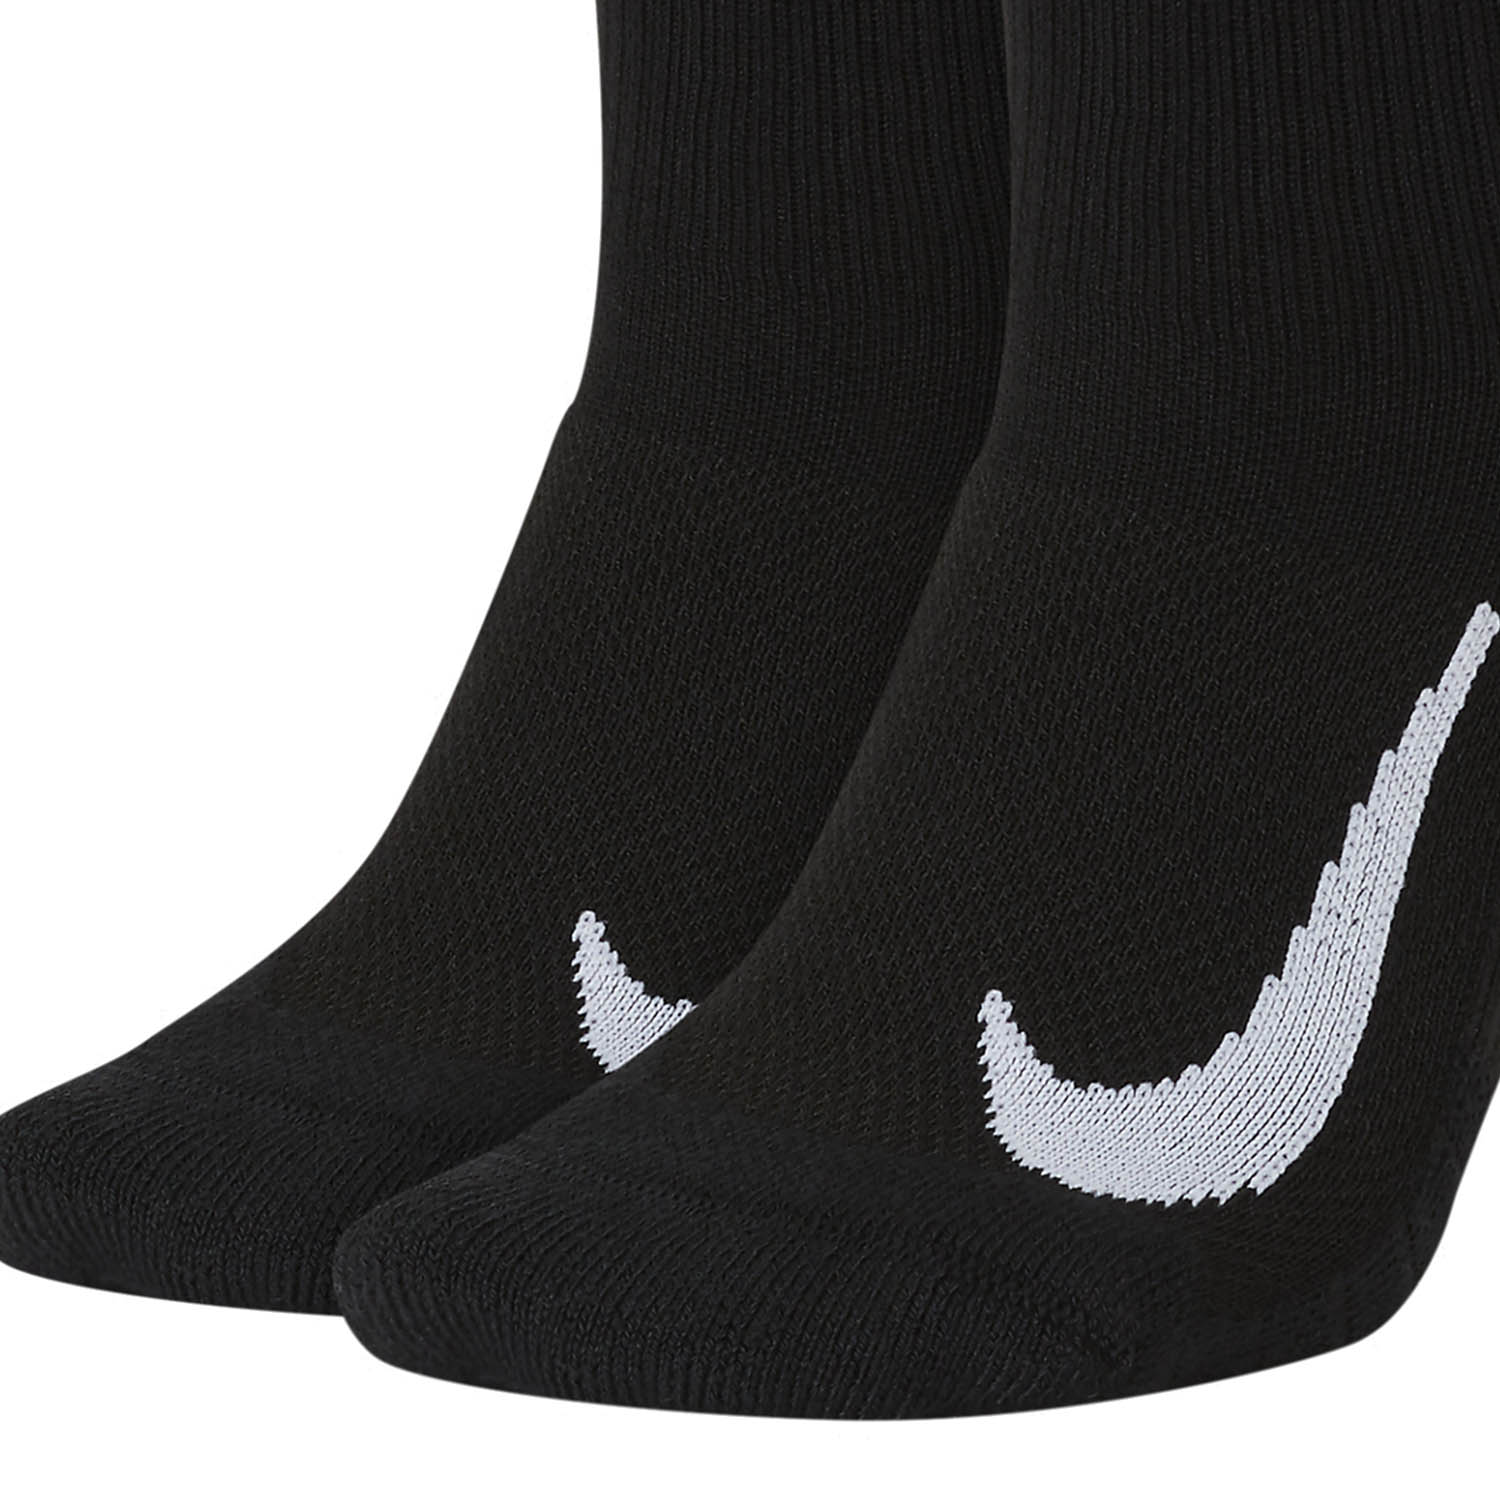 Nike Multiplier Max x 2 Socks - Black